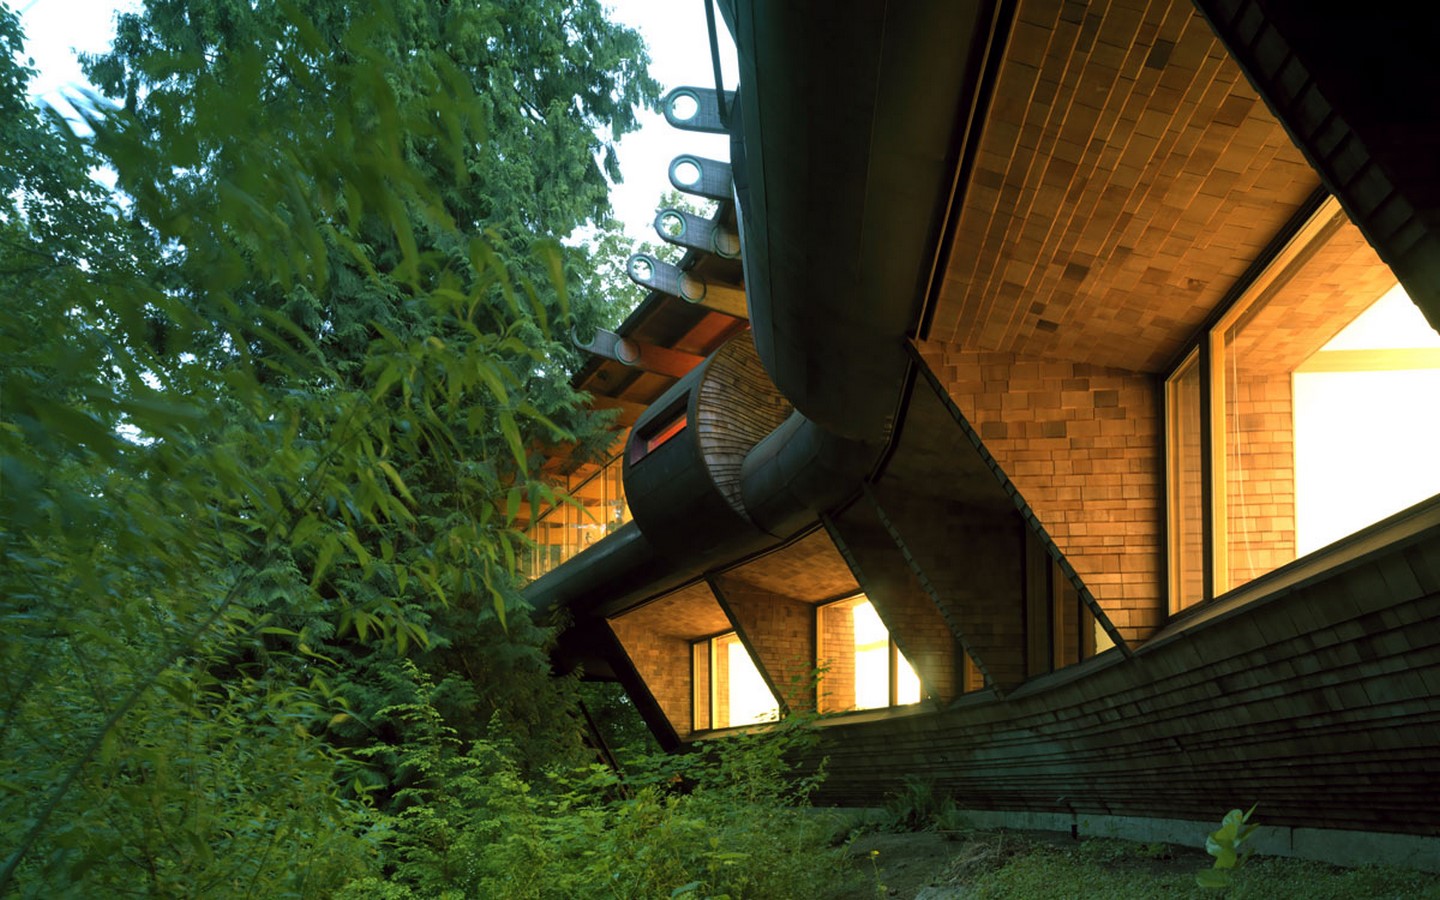 Futuristic Homes - Wilkinson Residence by Oshatz Architects